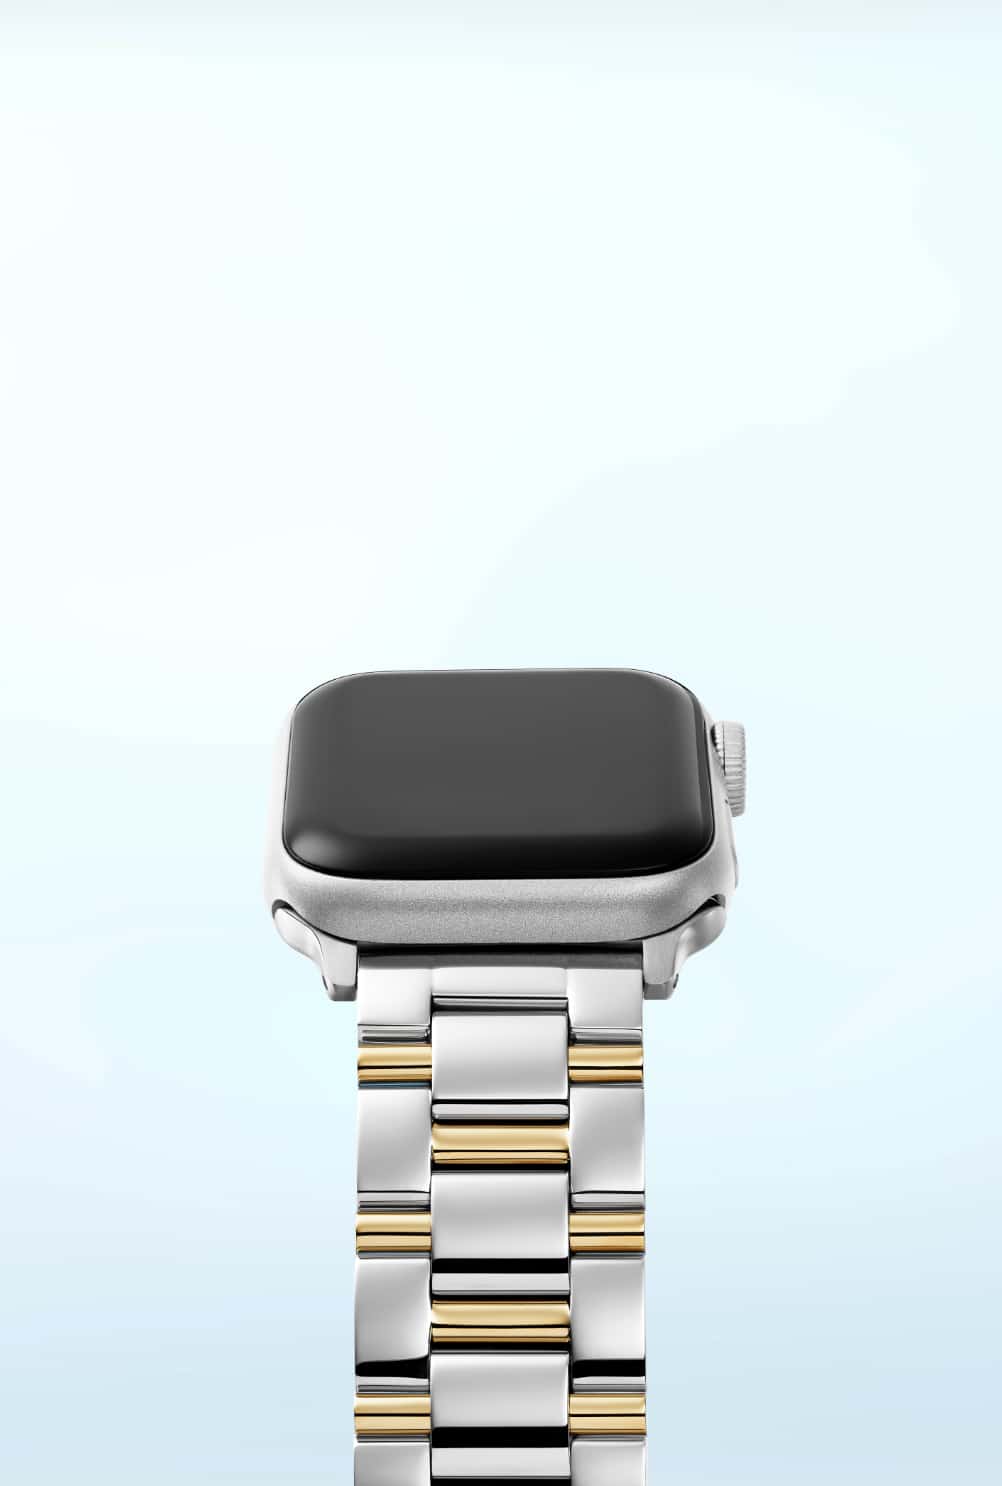 Apple Watch band.